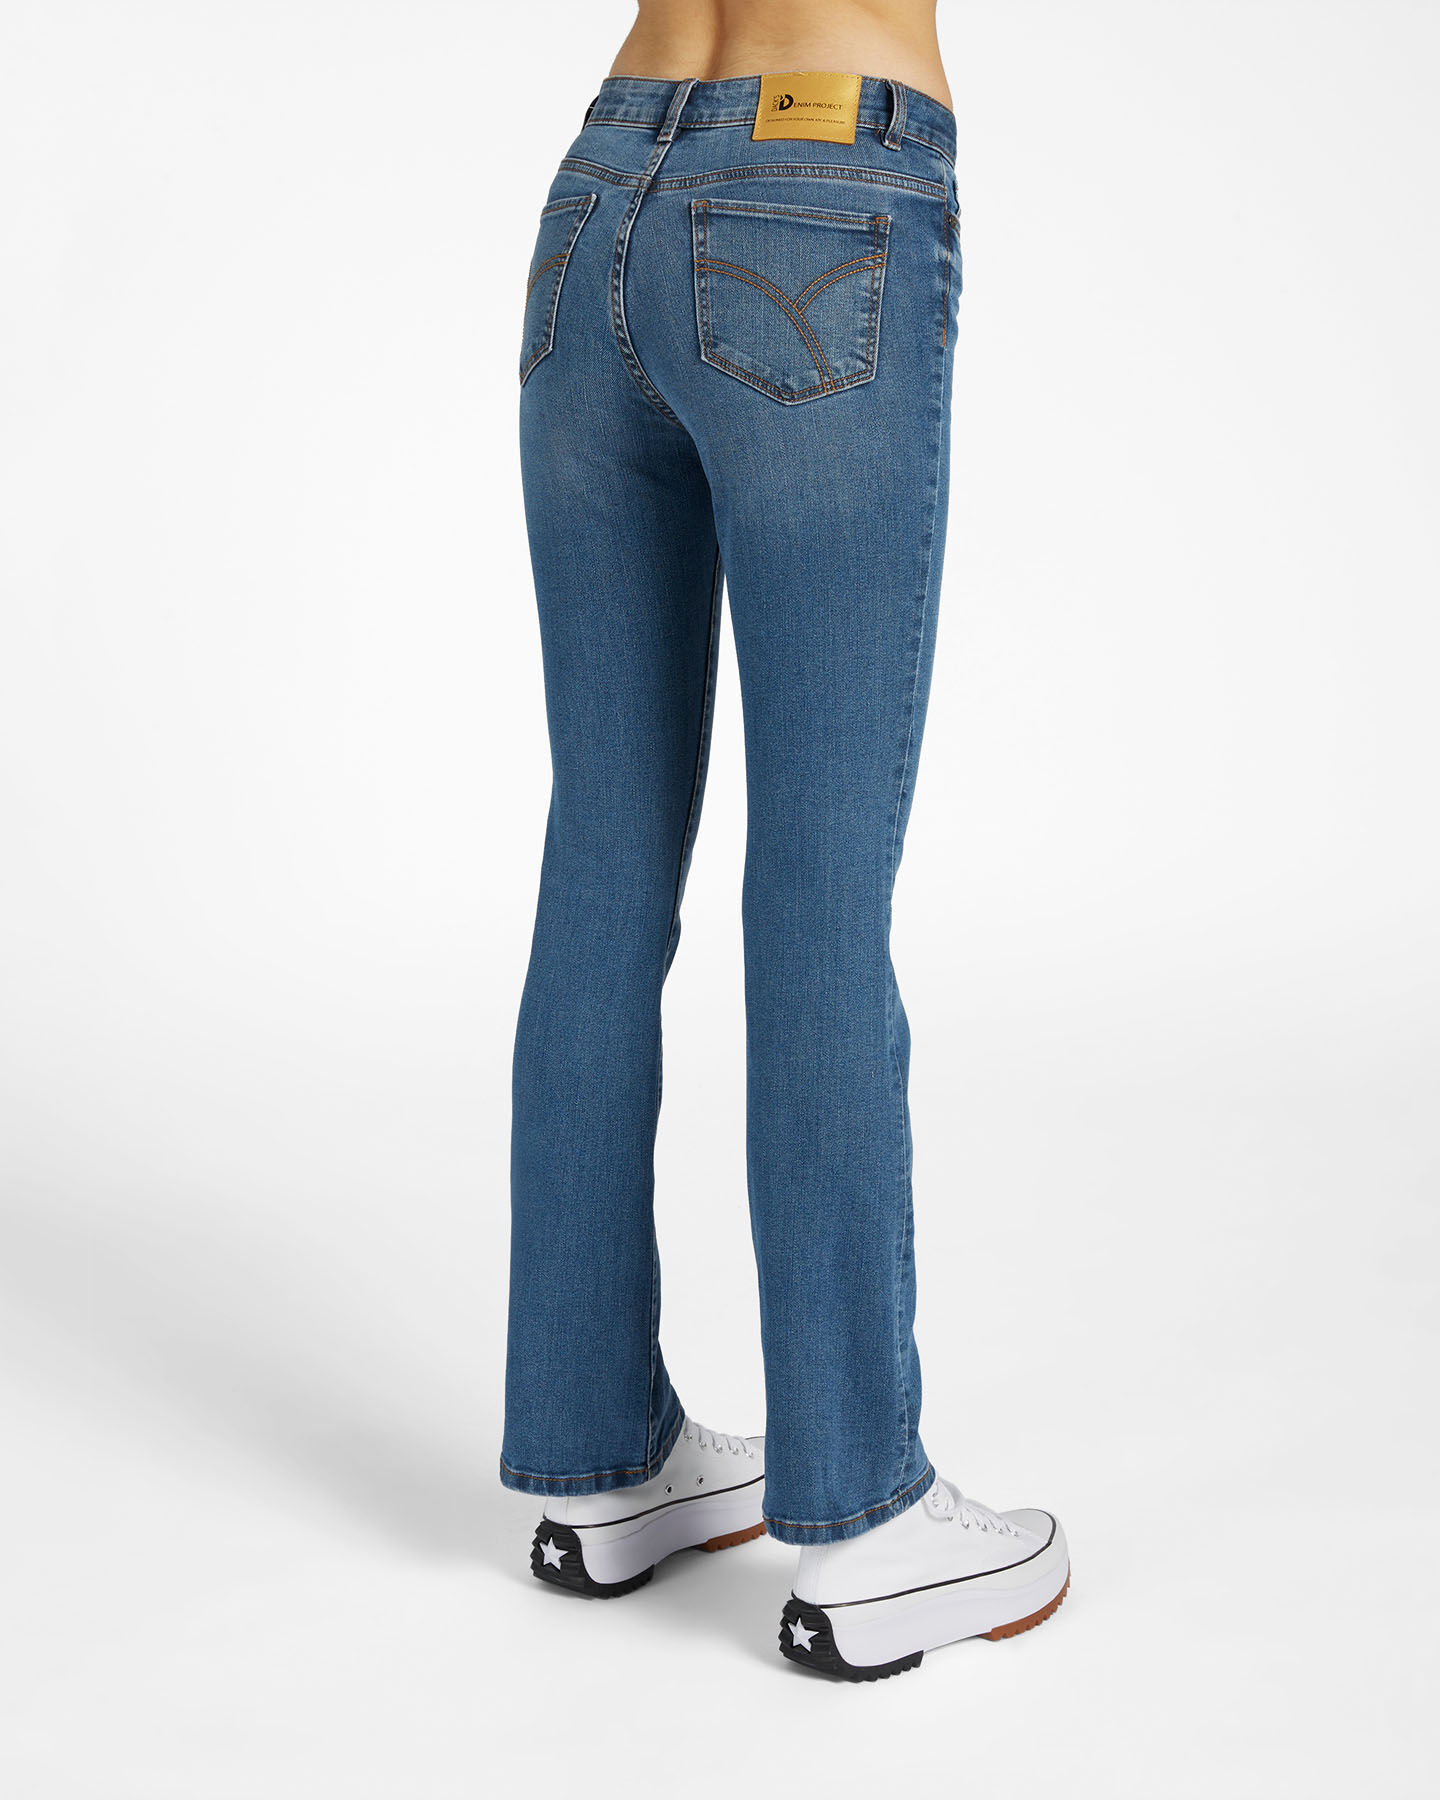  Jeans DACK'S CASUAL CITY W S4106774|DD|40 scatto 1